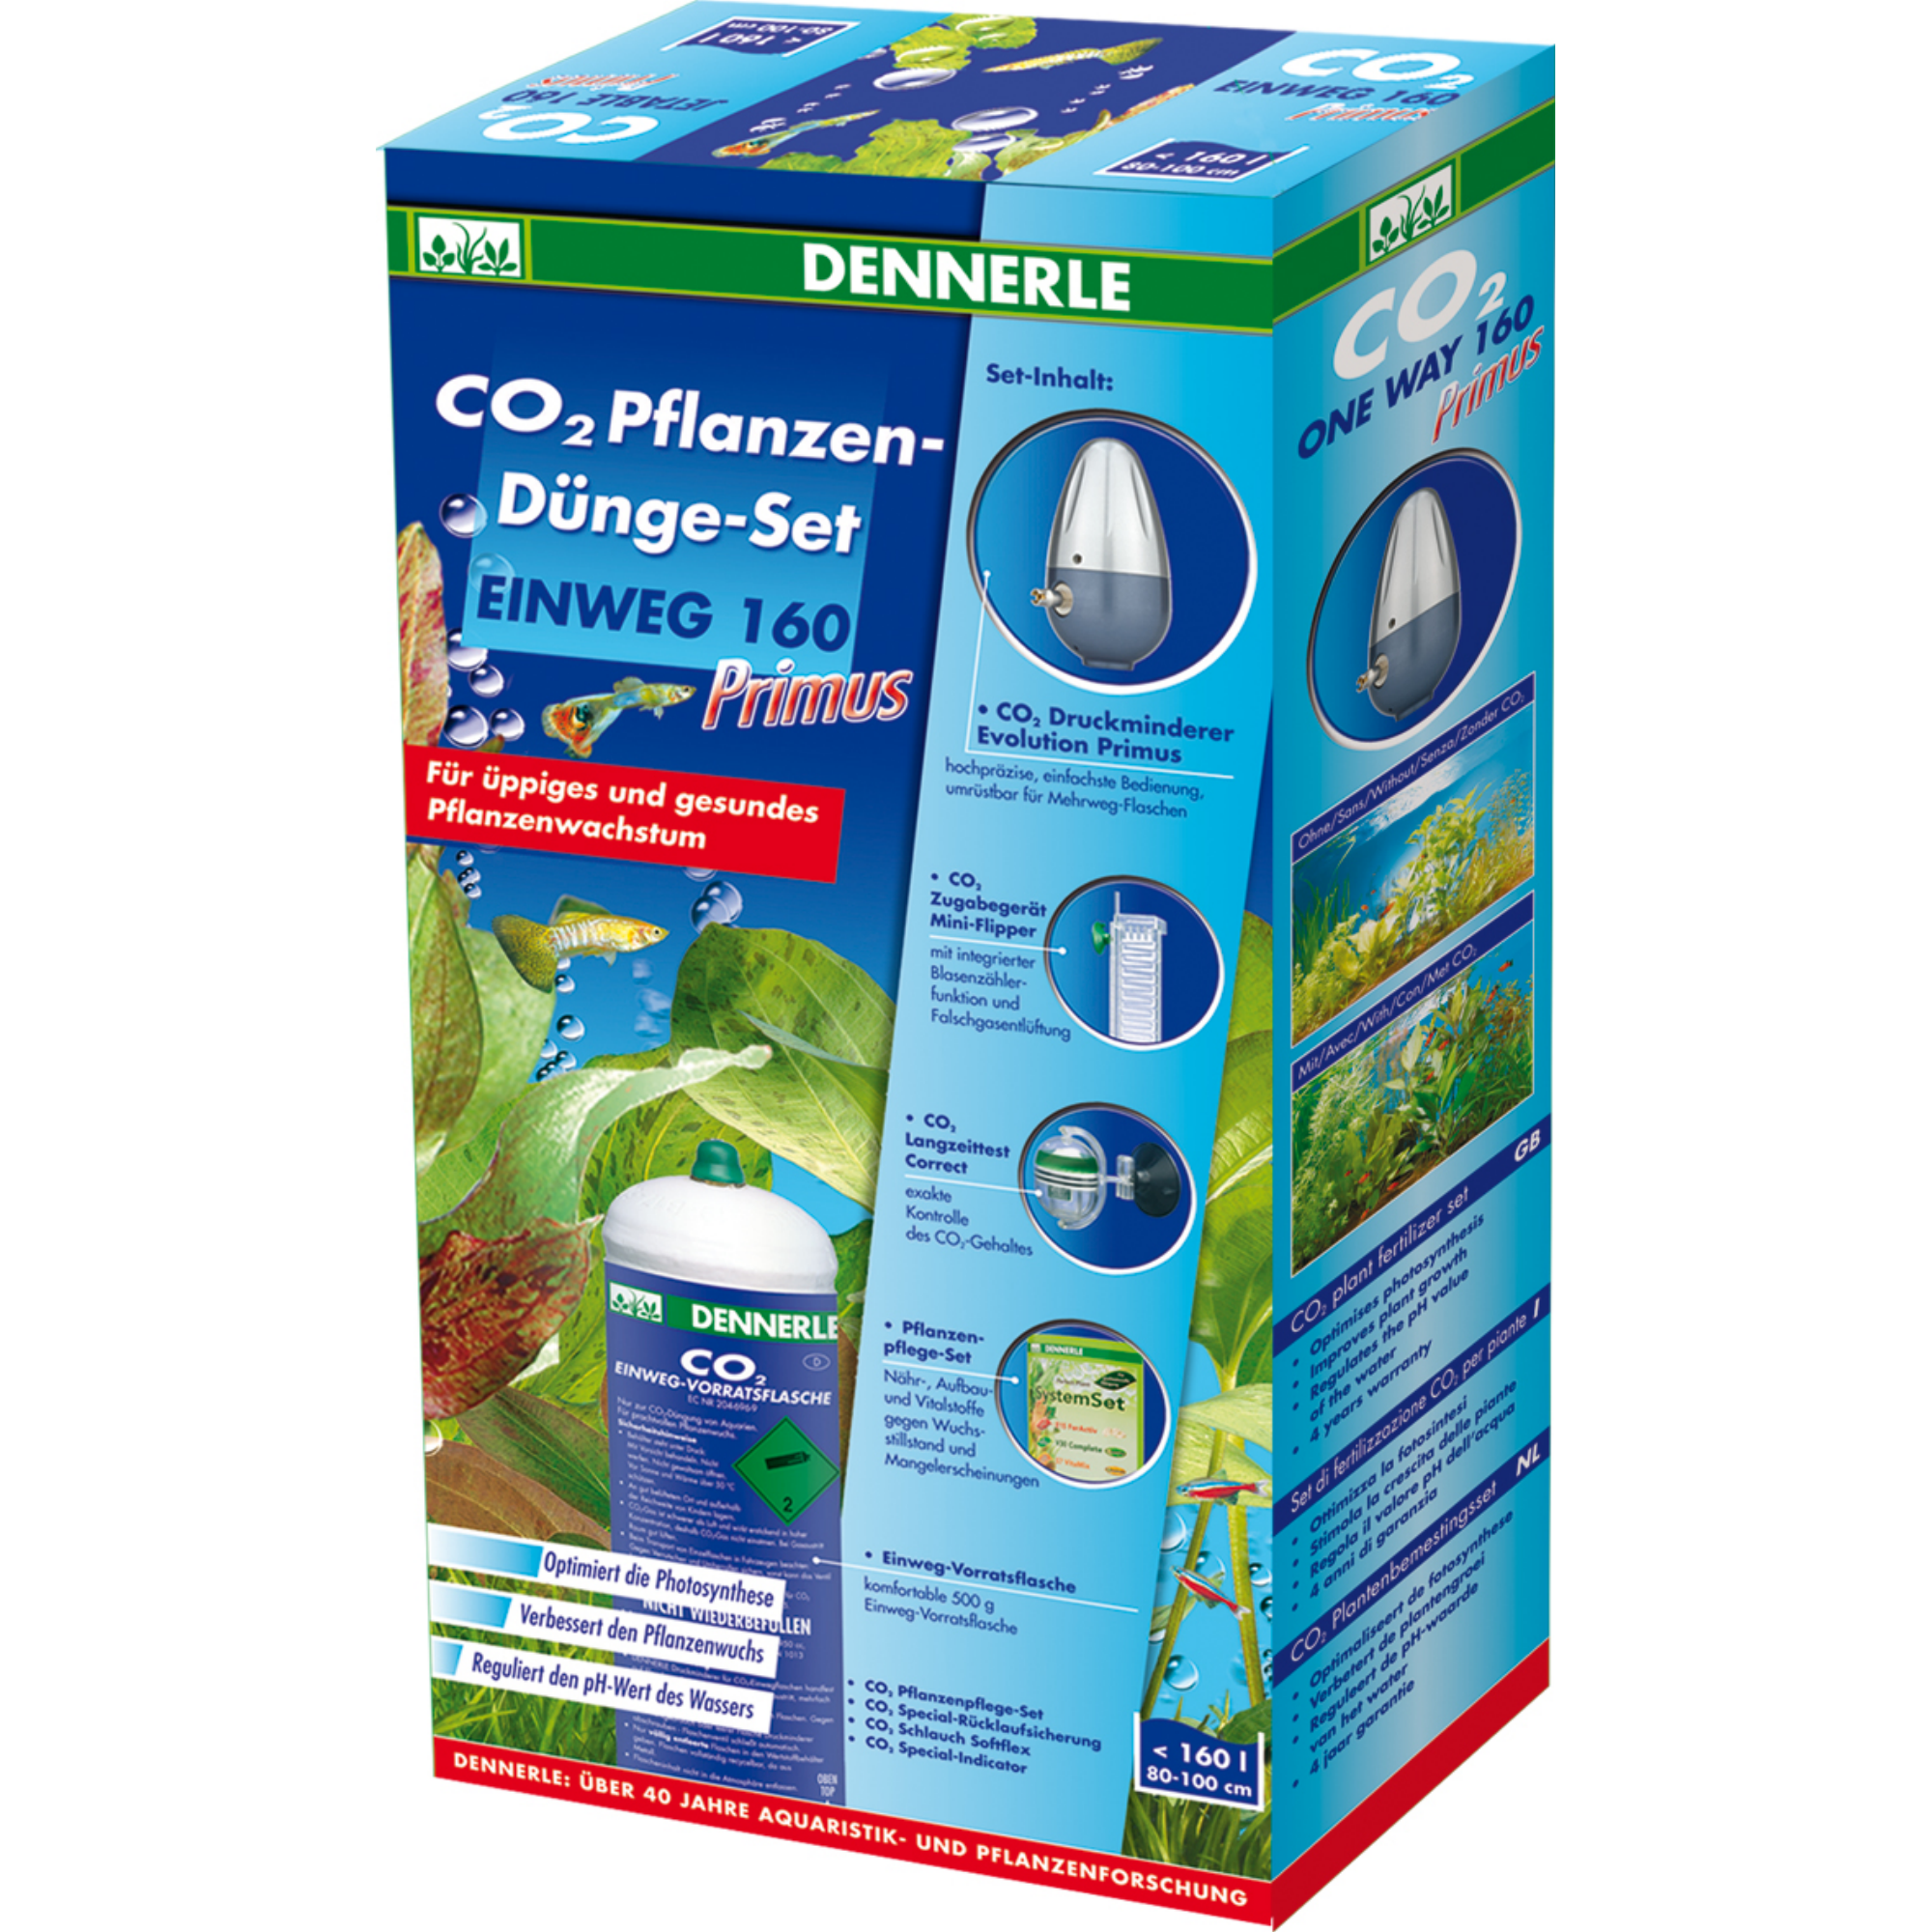 CO2 Pflanzen-Dünge-Set Primus + product picture